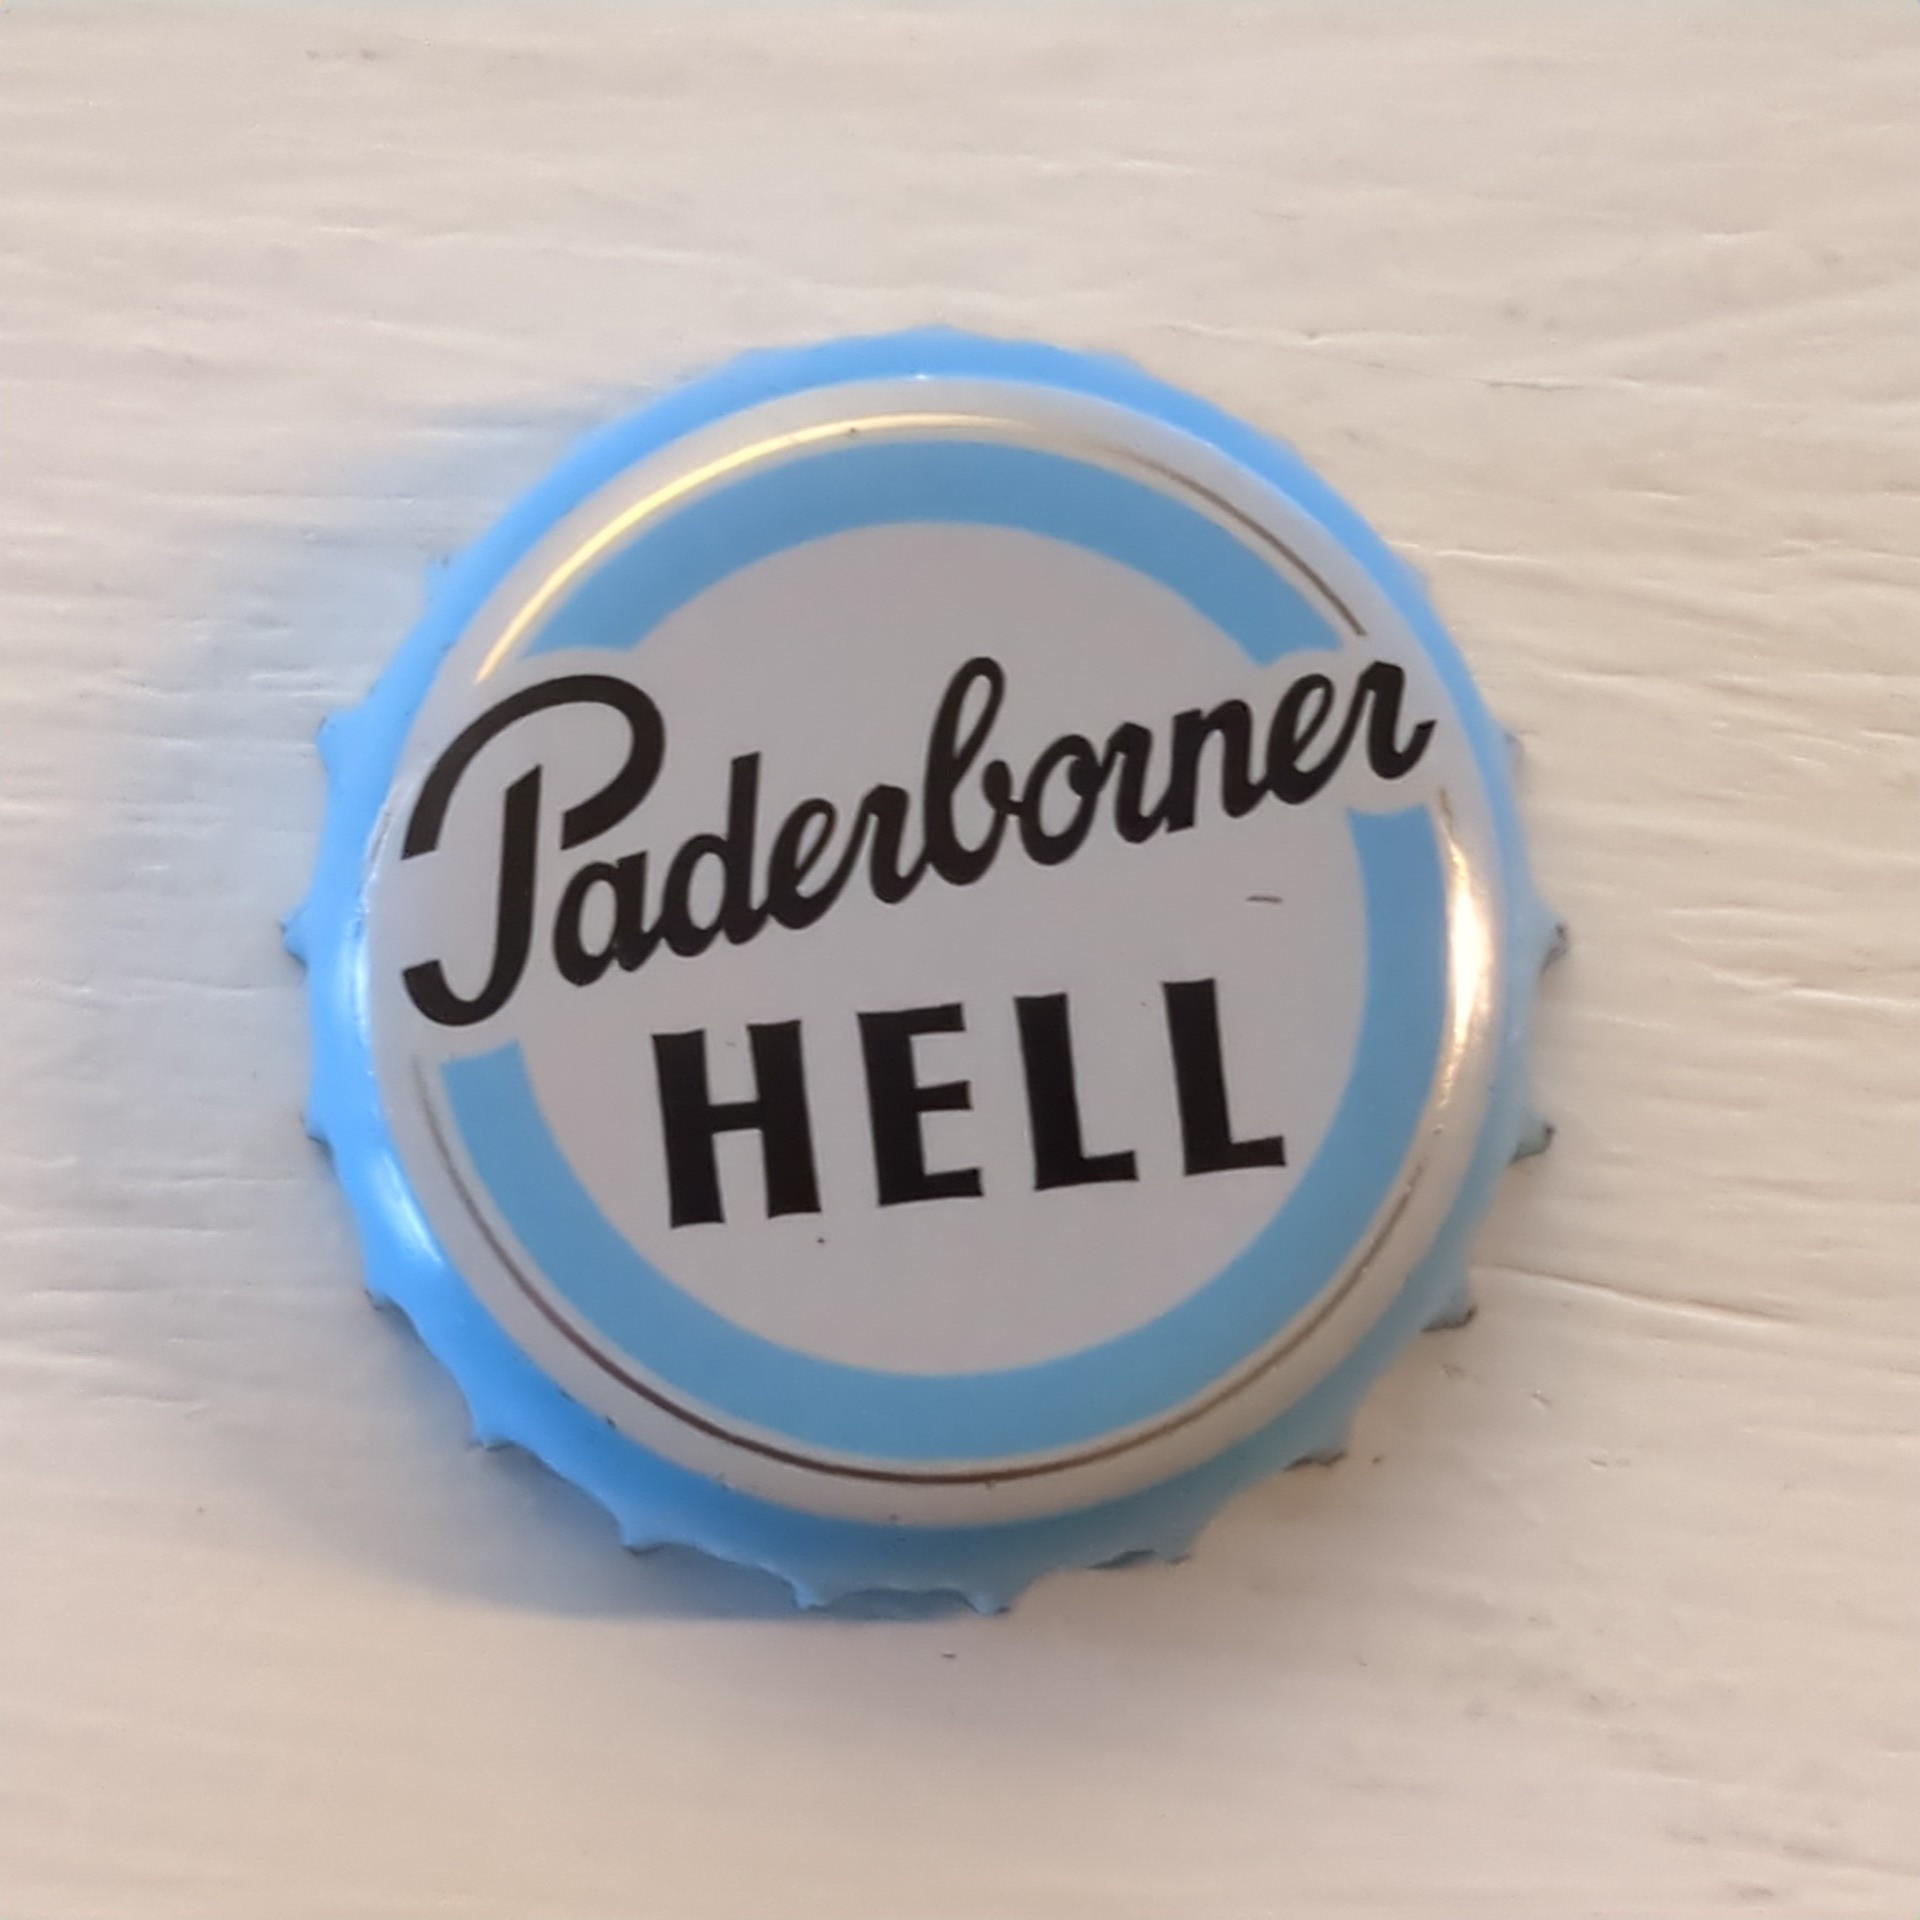 Paderborner Hell